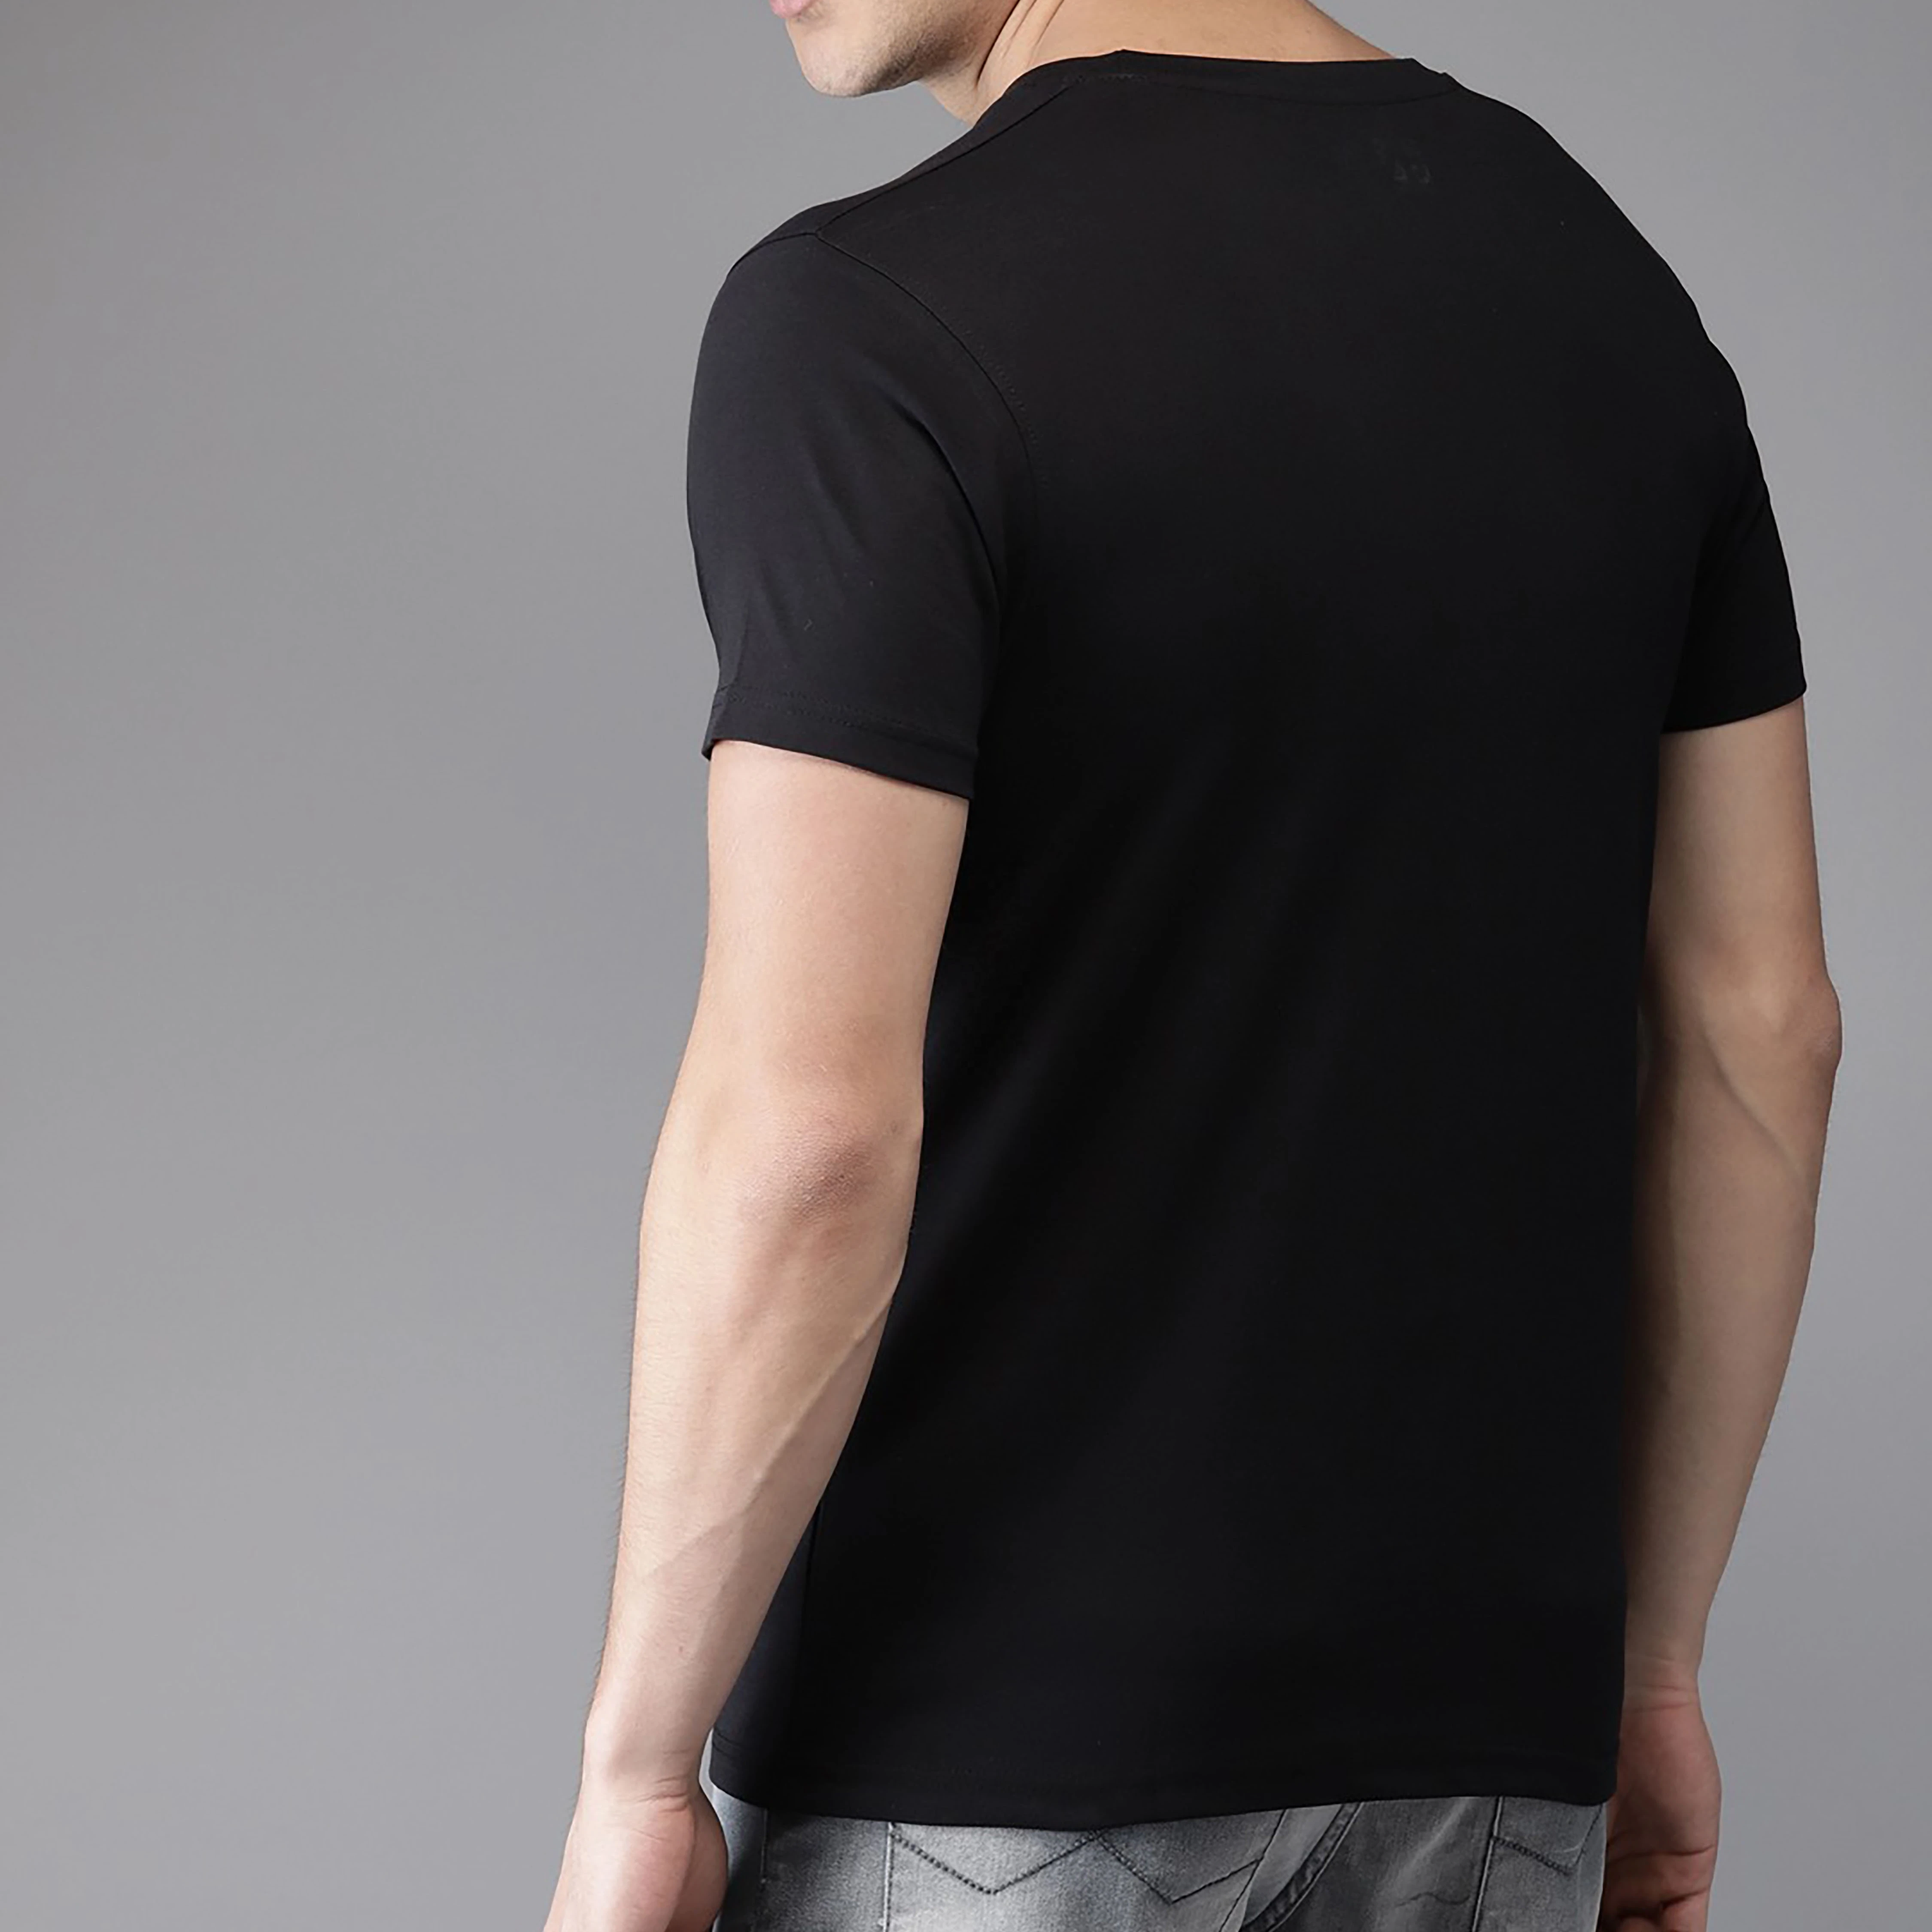 New Promotional full sleeve 100% cotton long sleeve men t shirt fitness apparel clothing factory Bangladesh